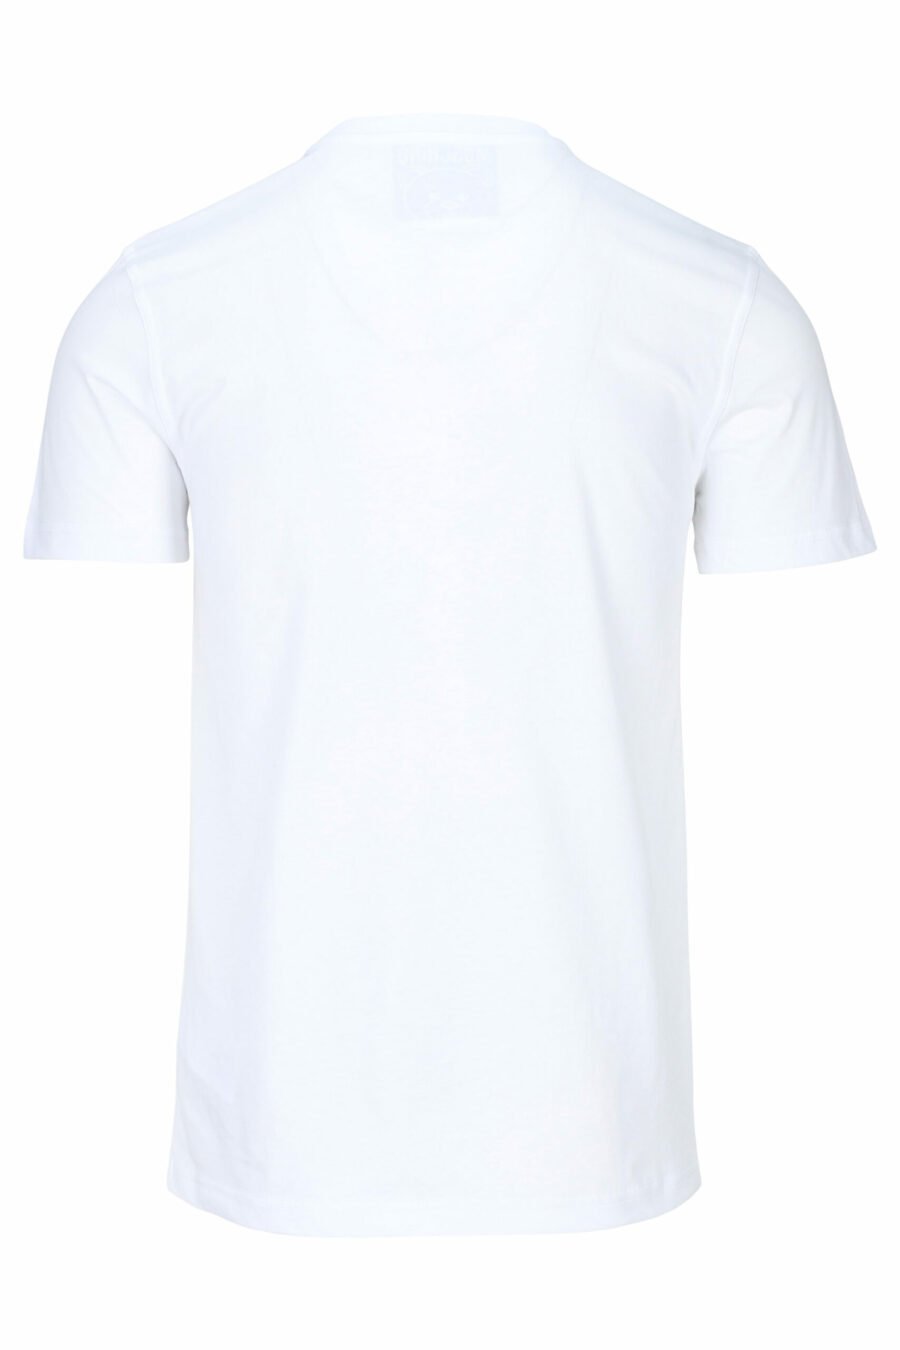 Weißes T-Shirt mit "teddy" maßgeschneidert maxilogo - 667113108100 1 skaliert